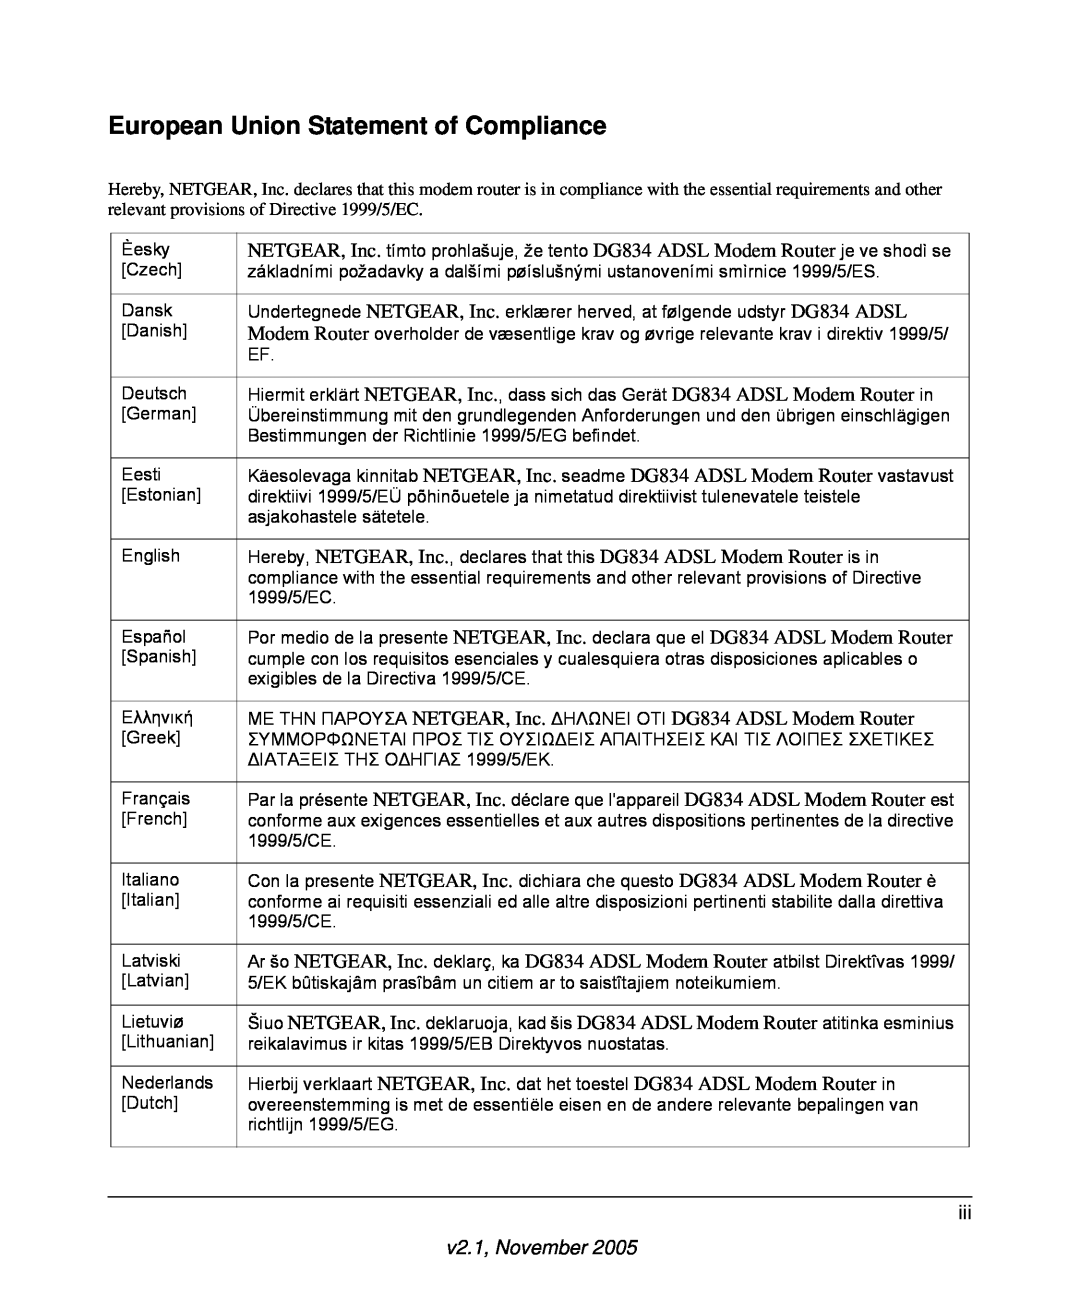 NETGEAR DG834 manual European Union Statement of Compliance, v2.1, November 